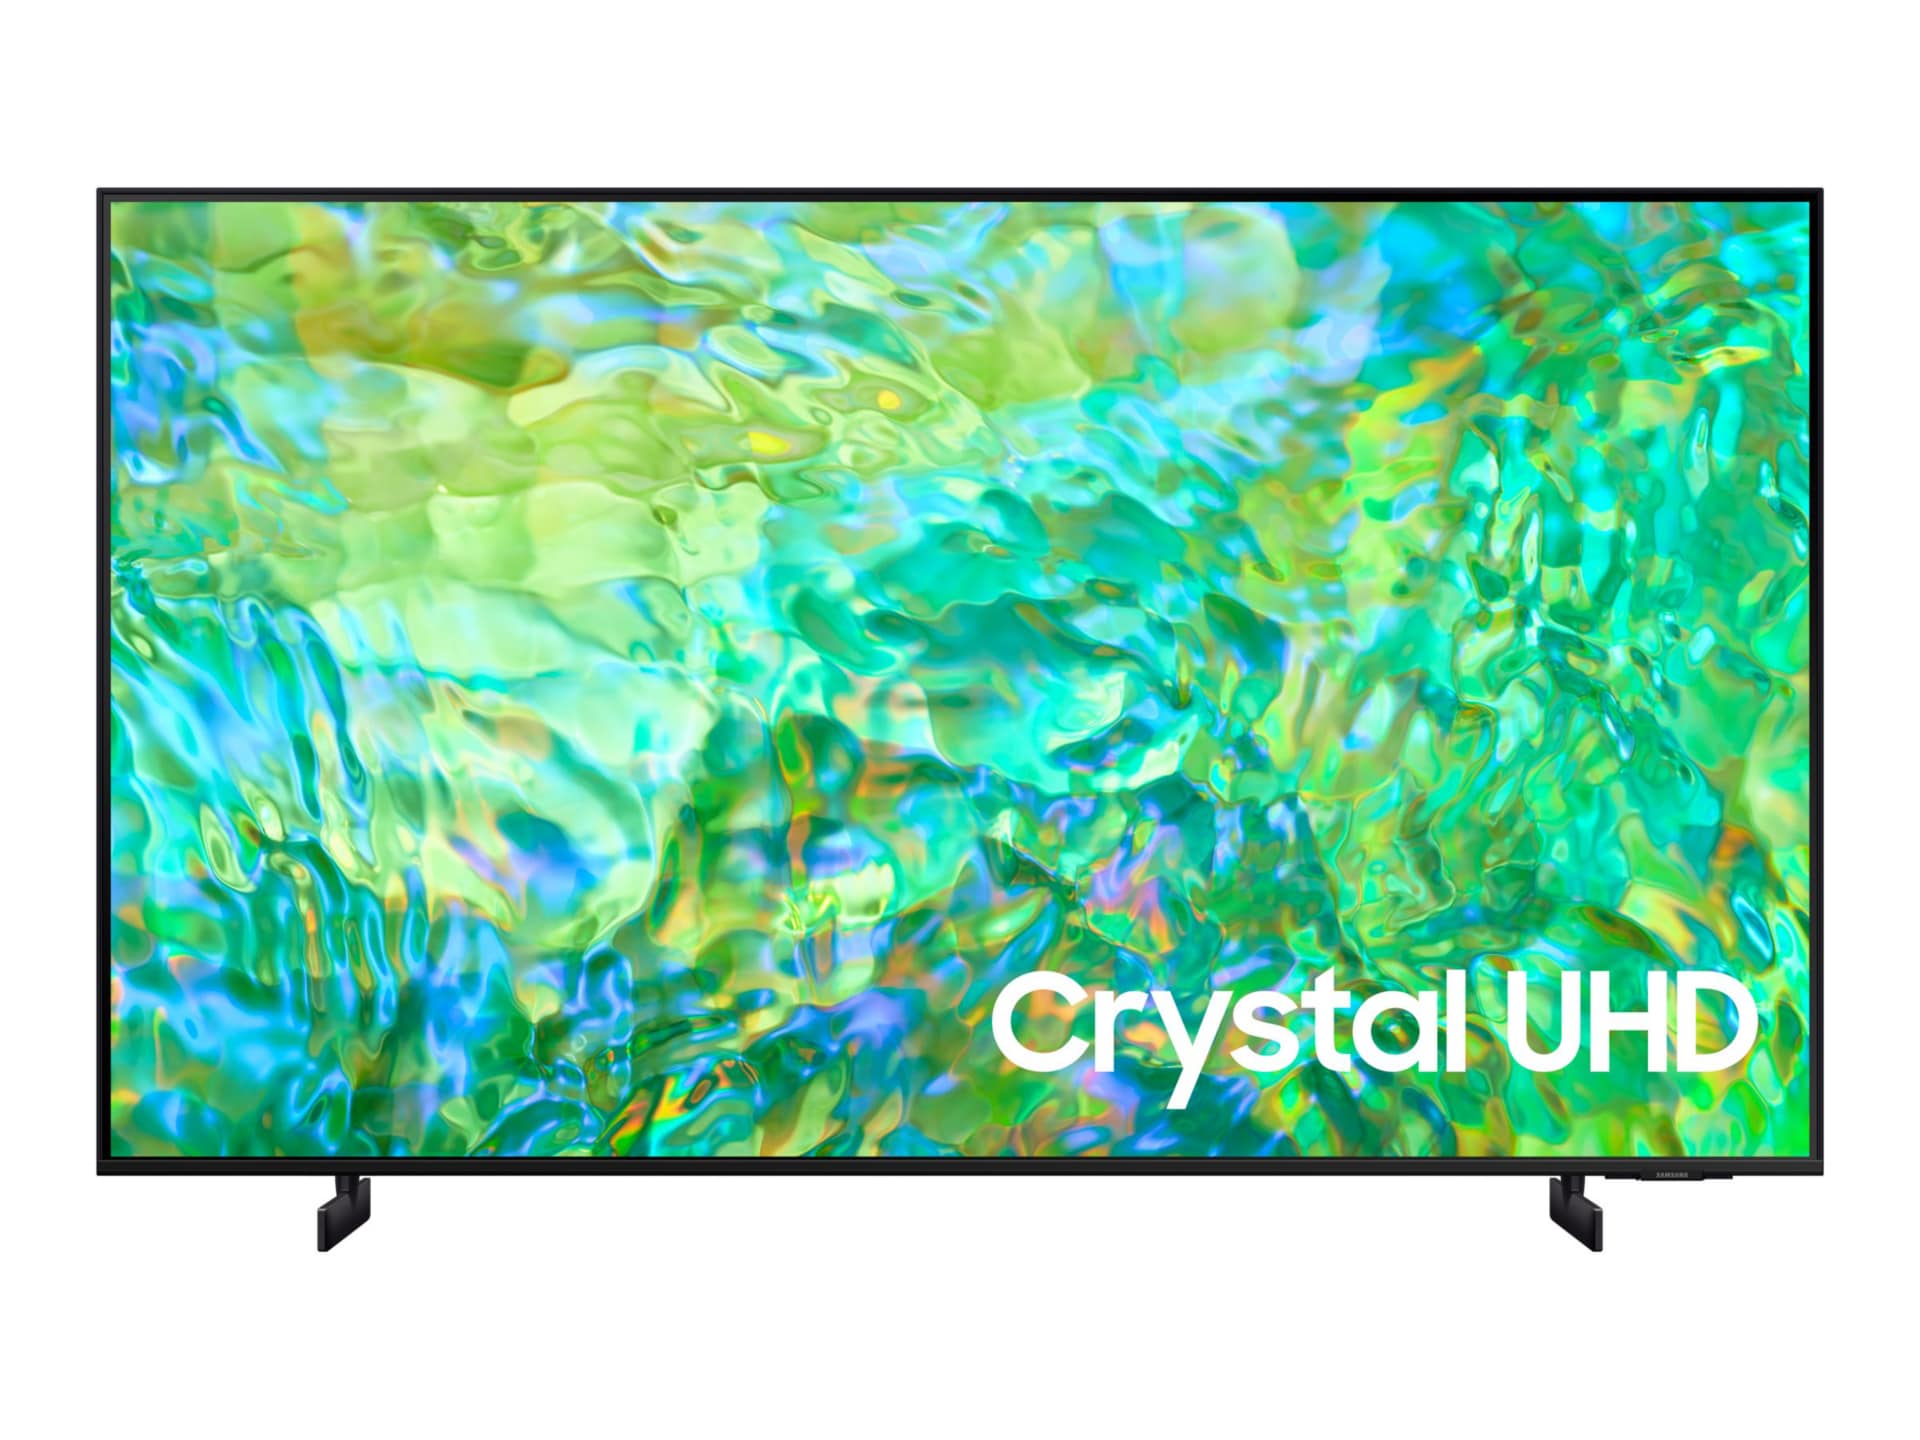 Samsung UN65CU8000F CU8000 Series - 65" Class (64.5" viewable) LED-backlit LCD TV - Crystal UHD - 4K